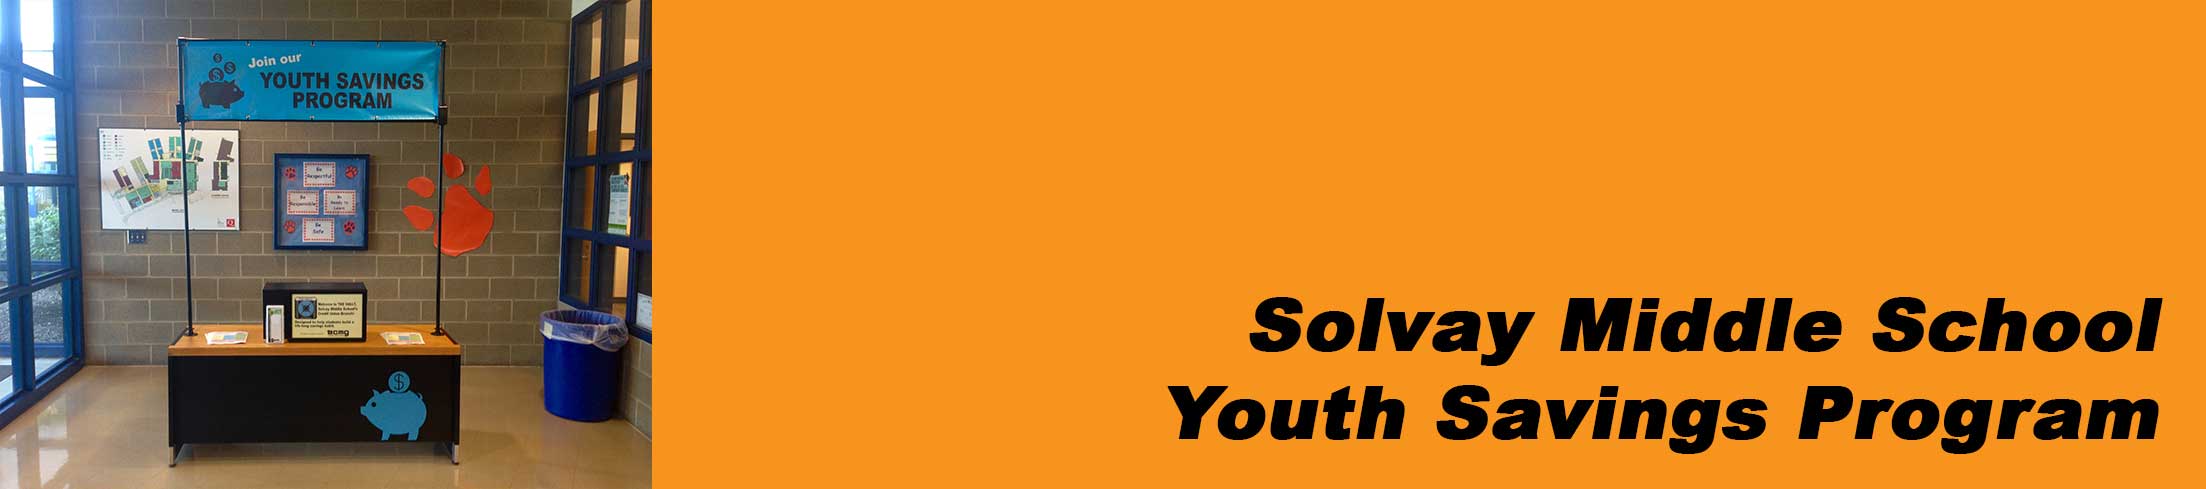 Solvay Middle School Youth Savings Program